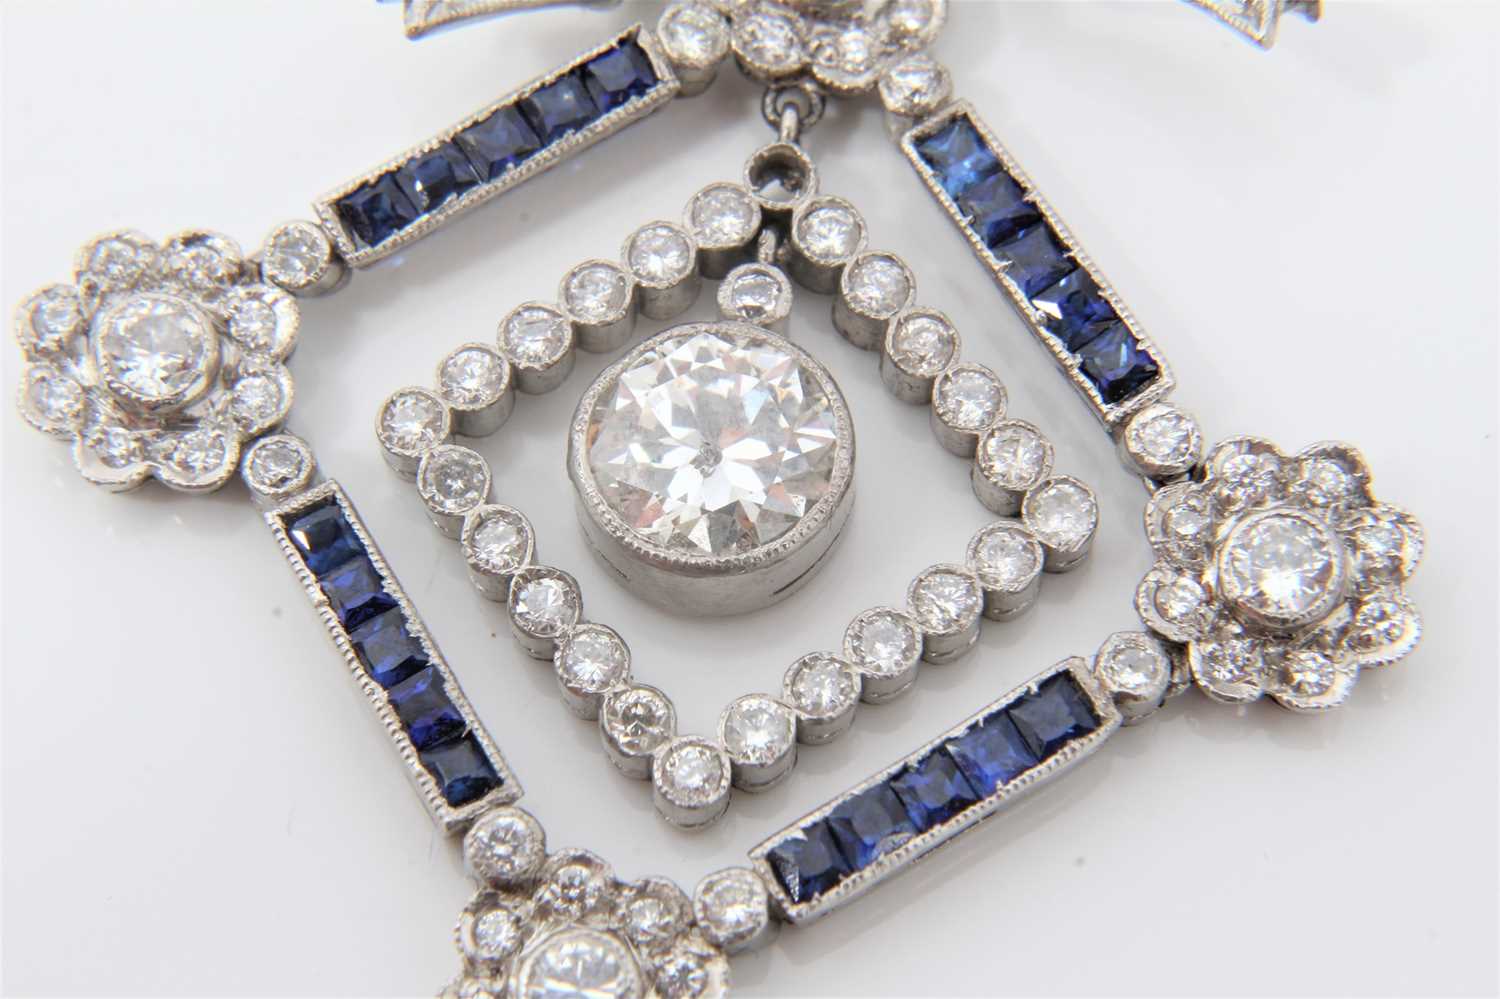 Edwardian style Belle Époque diamond and sapphire pendant necklace - Image 7 of 9